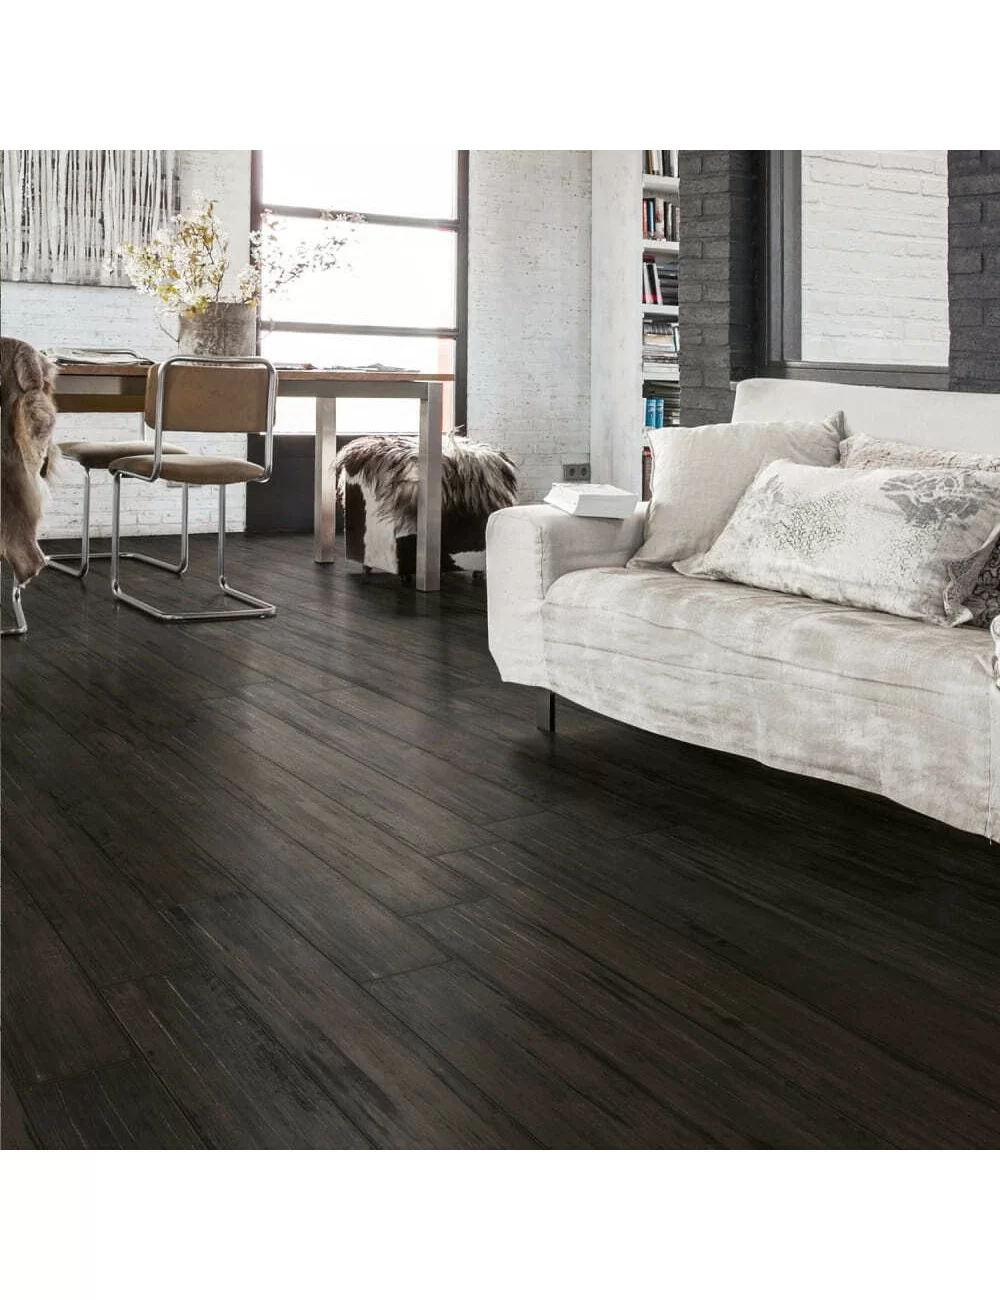 dark wood effect flooring